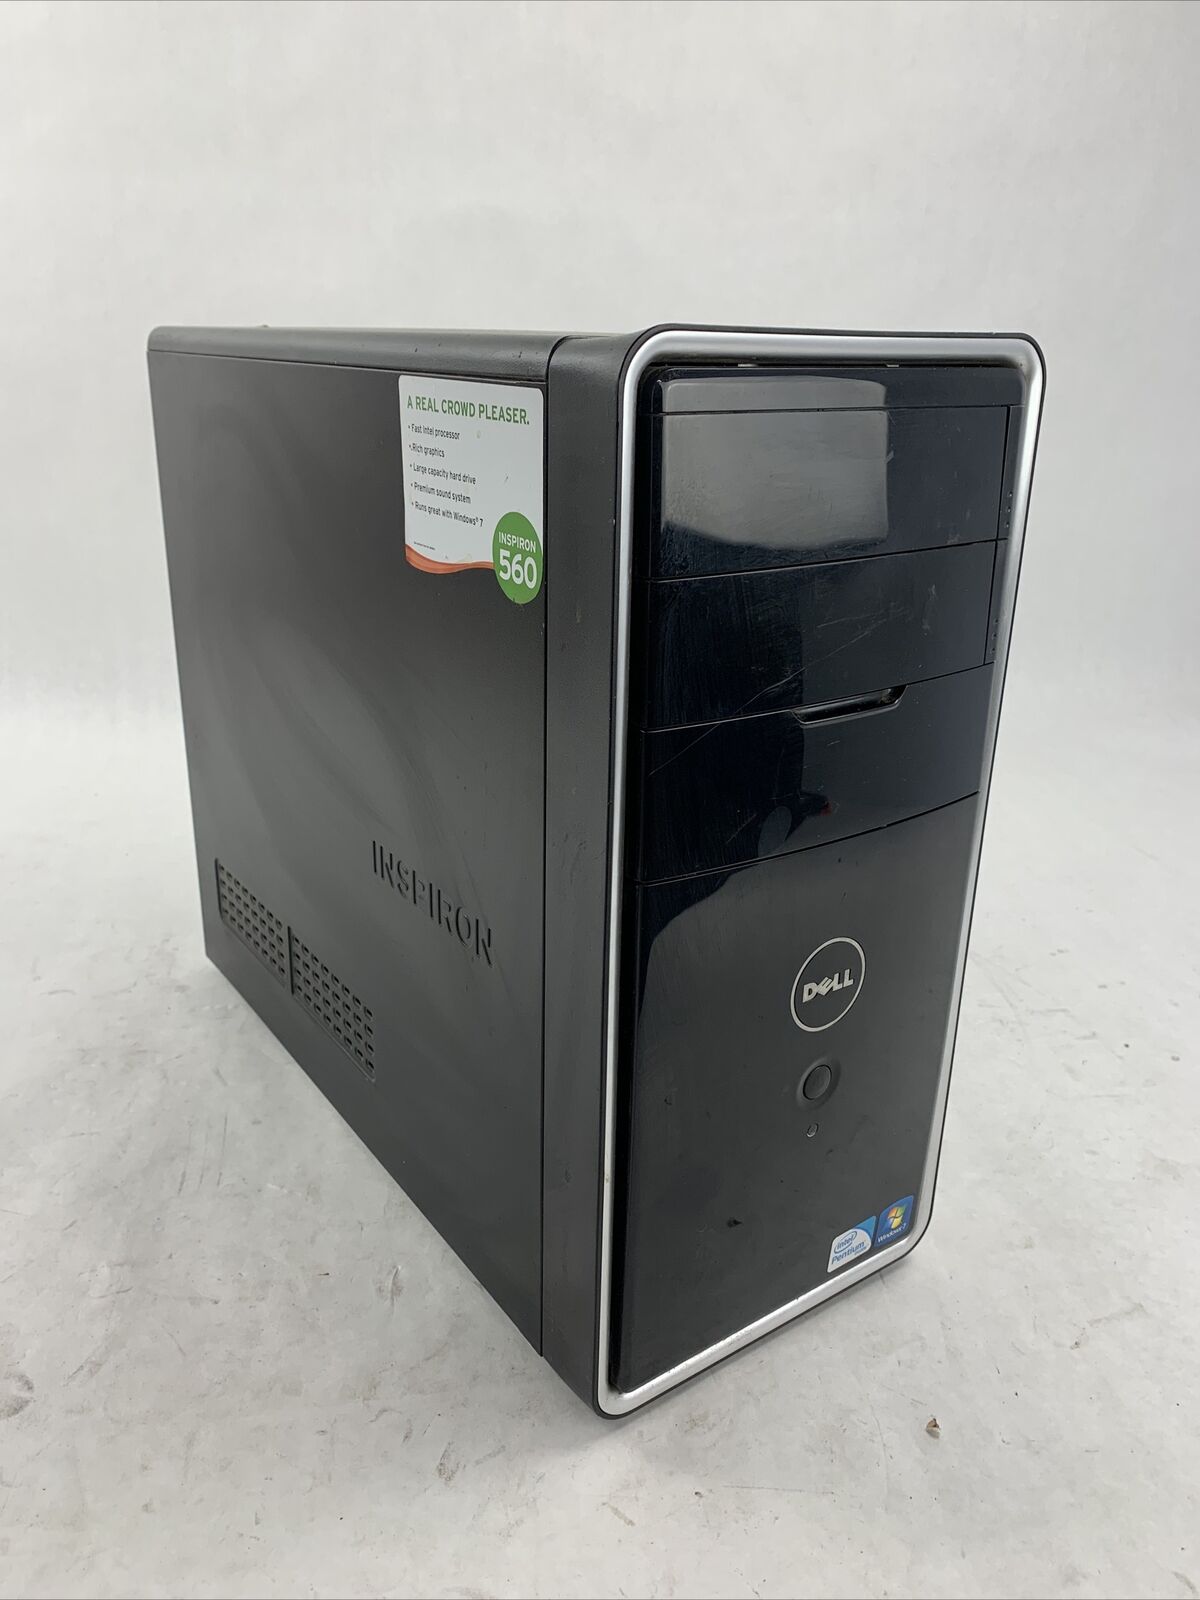 Dell Inspiron 660s SFF Intel Celeron G465 1.9GHz 2GB RAM No HDD No OS